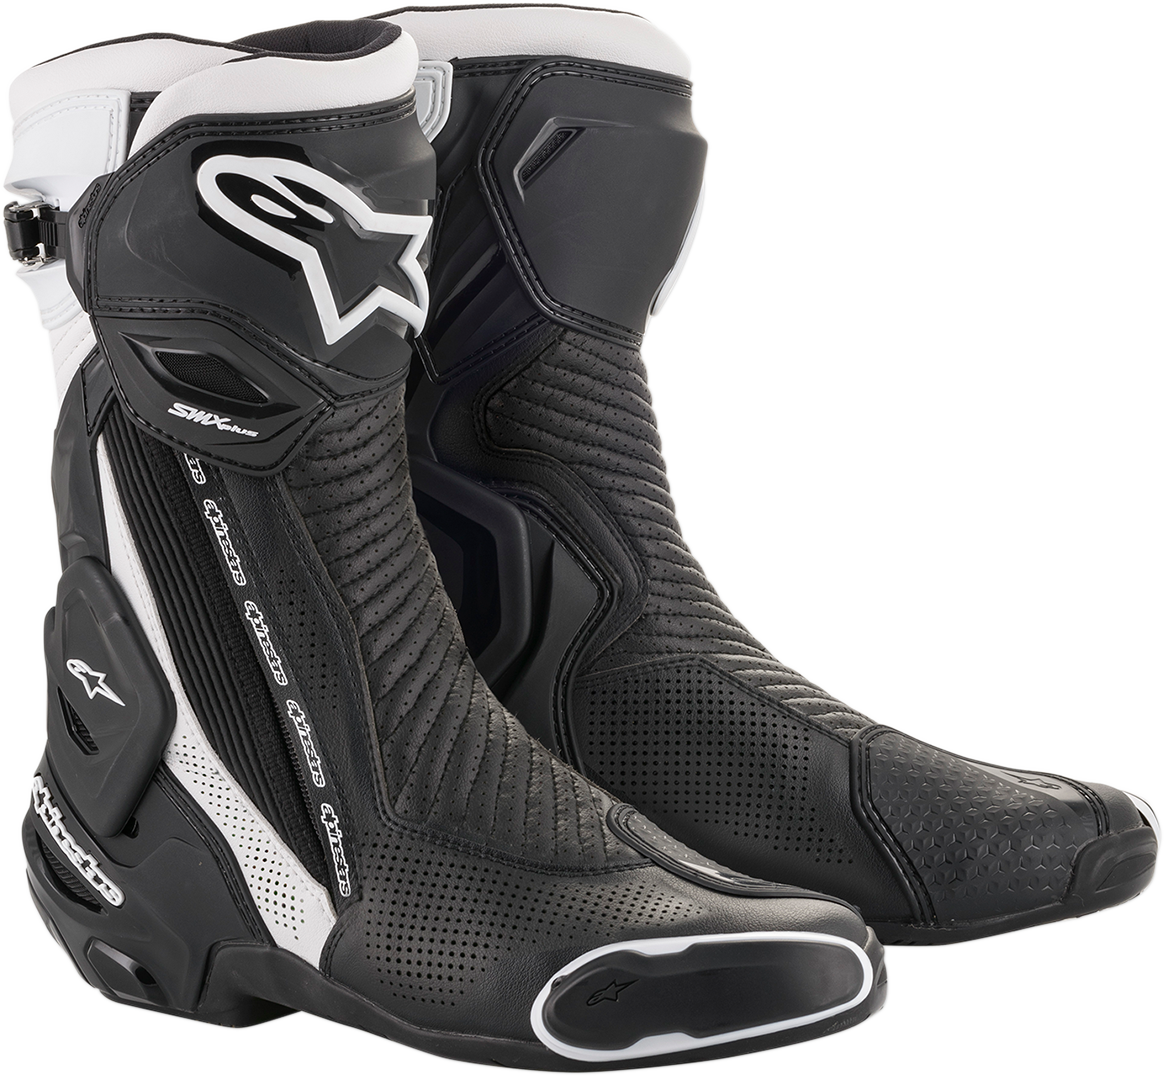 SMX+ Vented Boots - Black/White - US 5 / EU 38